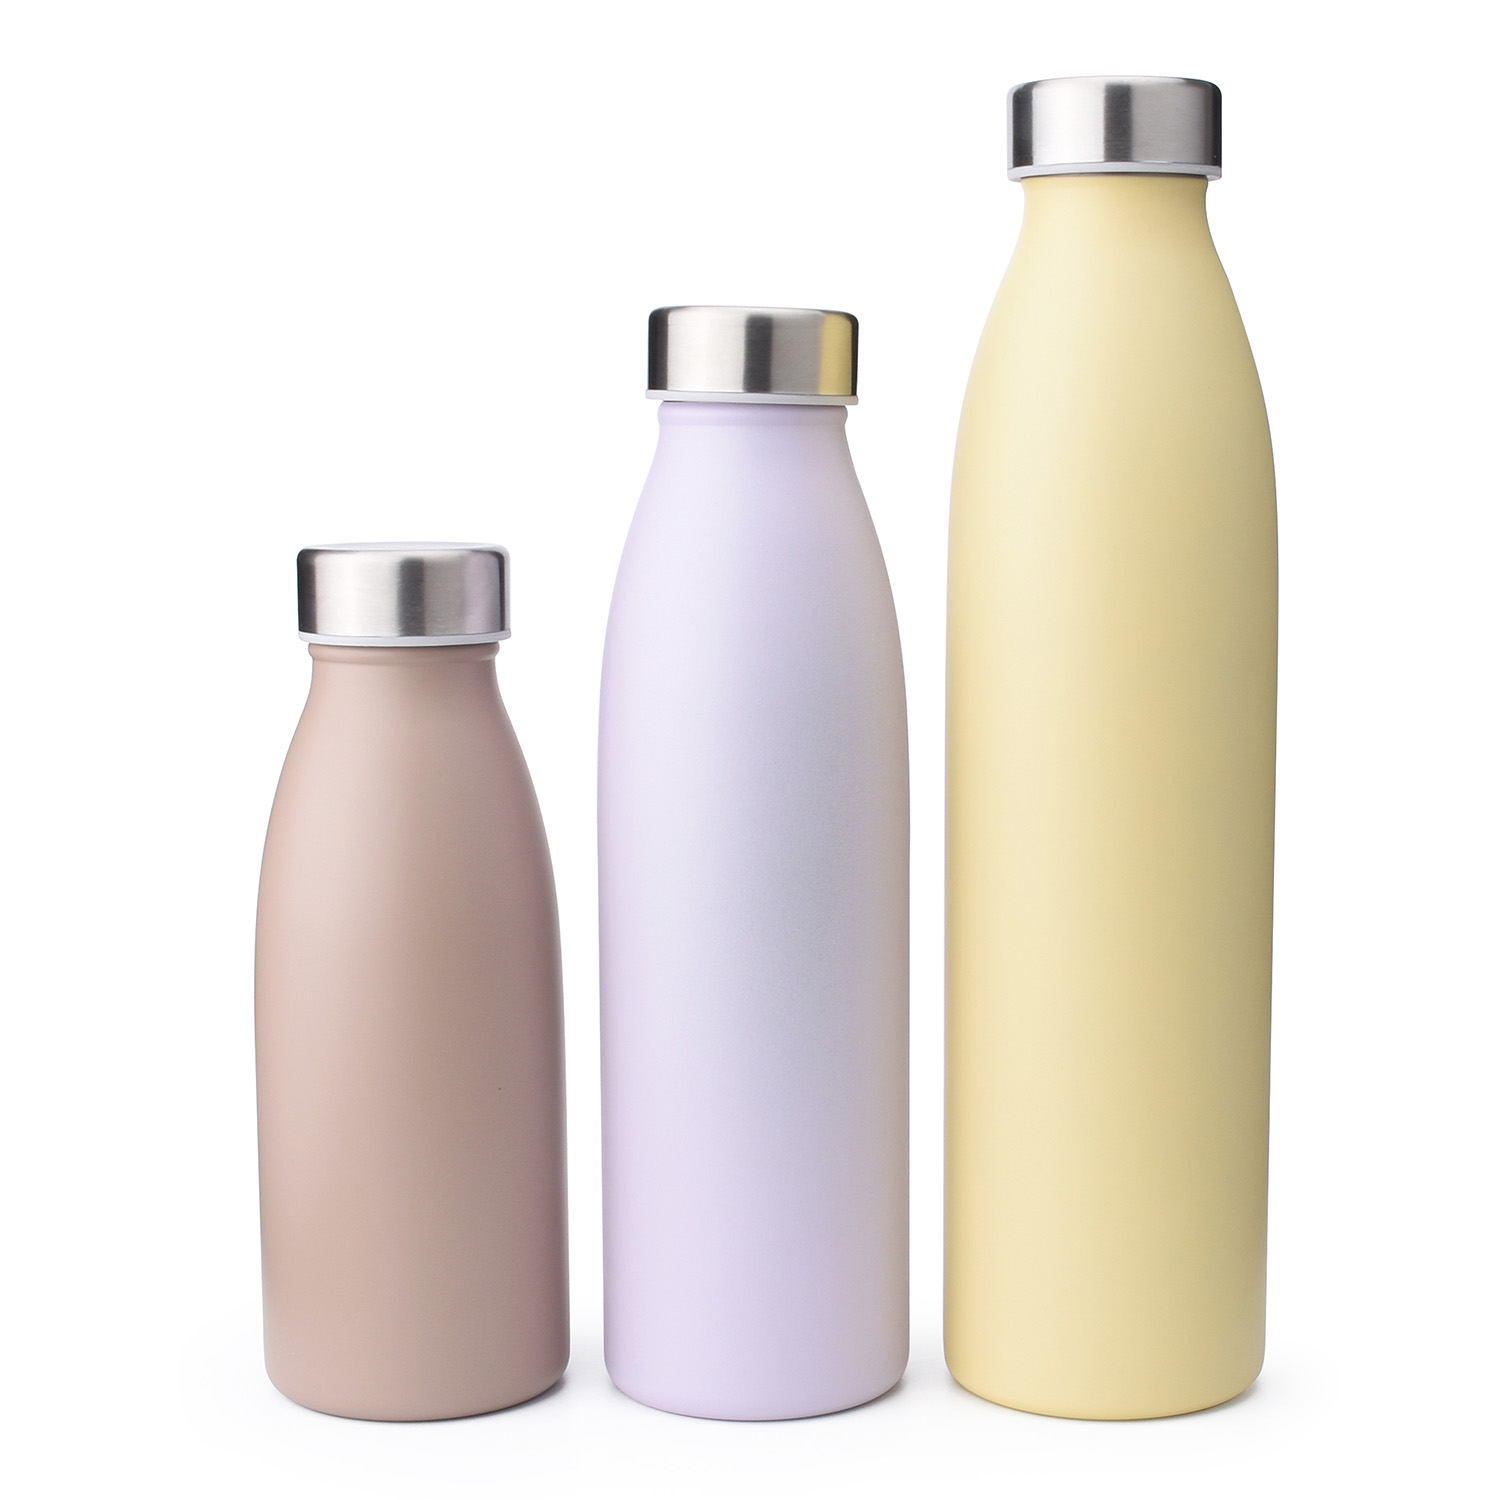 KingStar S1117C2 Insulated Stainless Steel Milk Bottle Water Flask